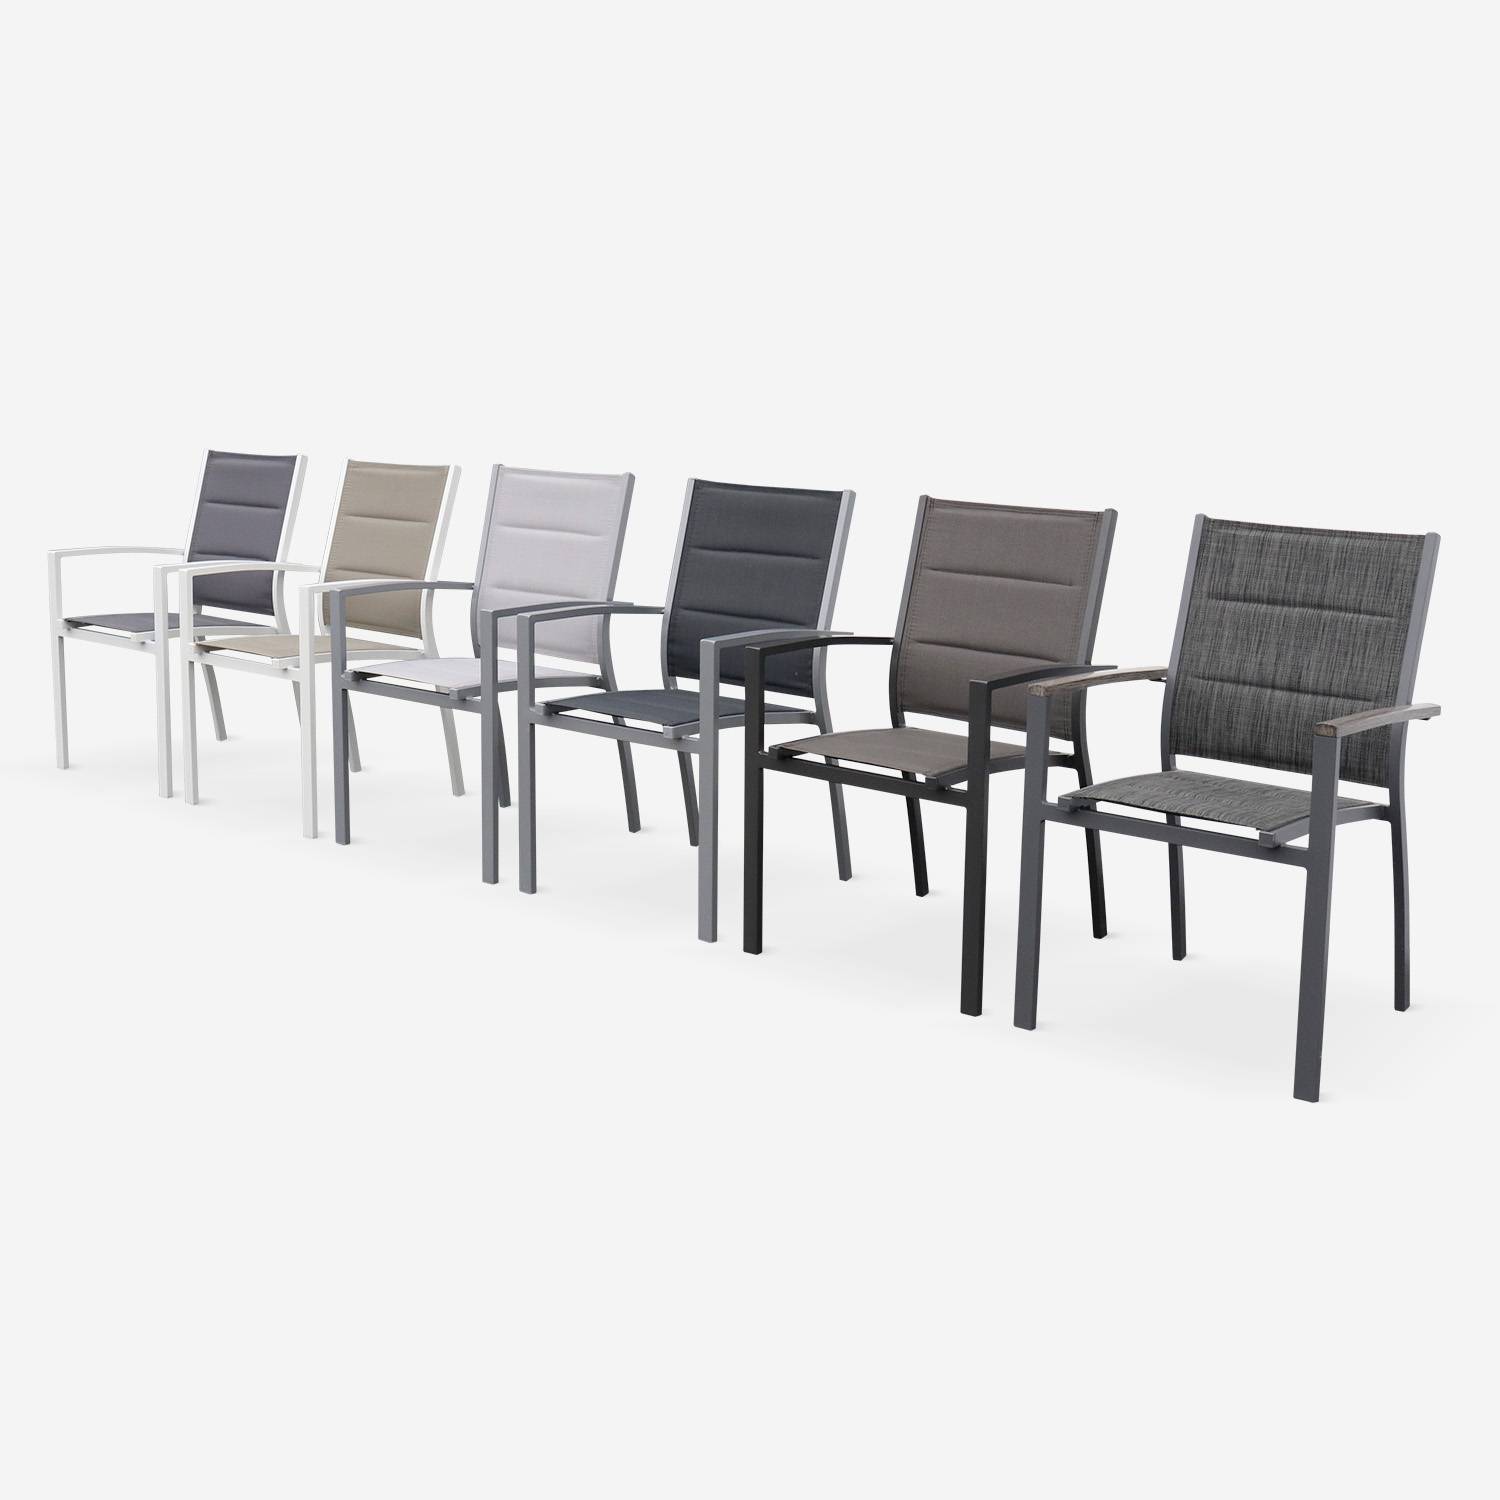 Juego de 2 sillas - Chicago / Odenton / Philadelphia Antracita - aluminio antracita y textileno gris oscuro, apilables Photo4